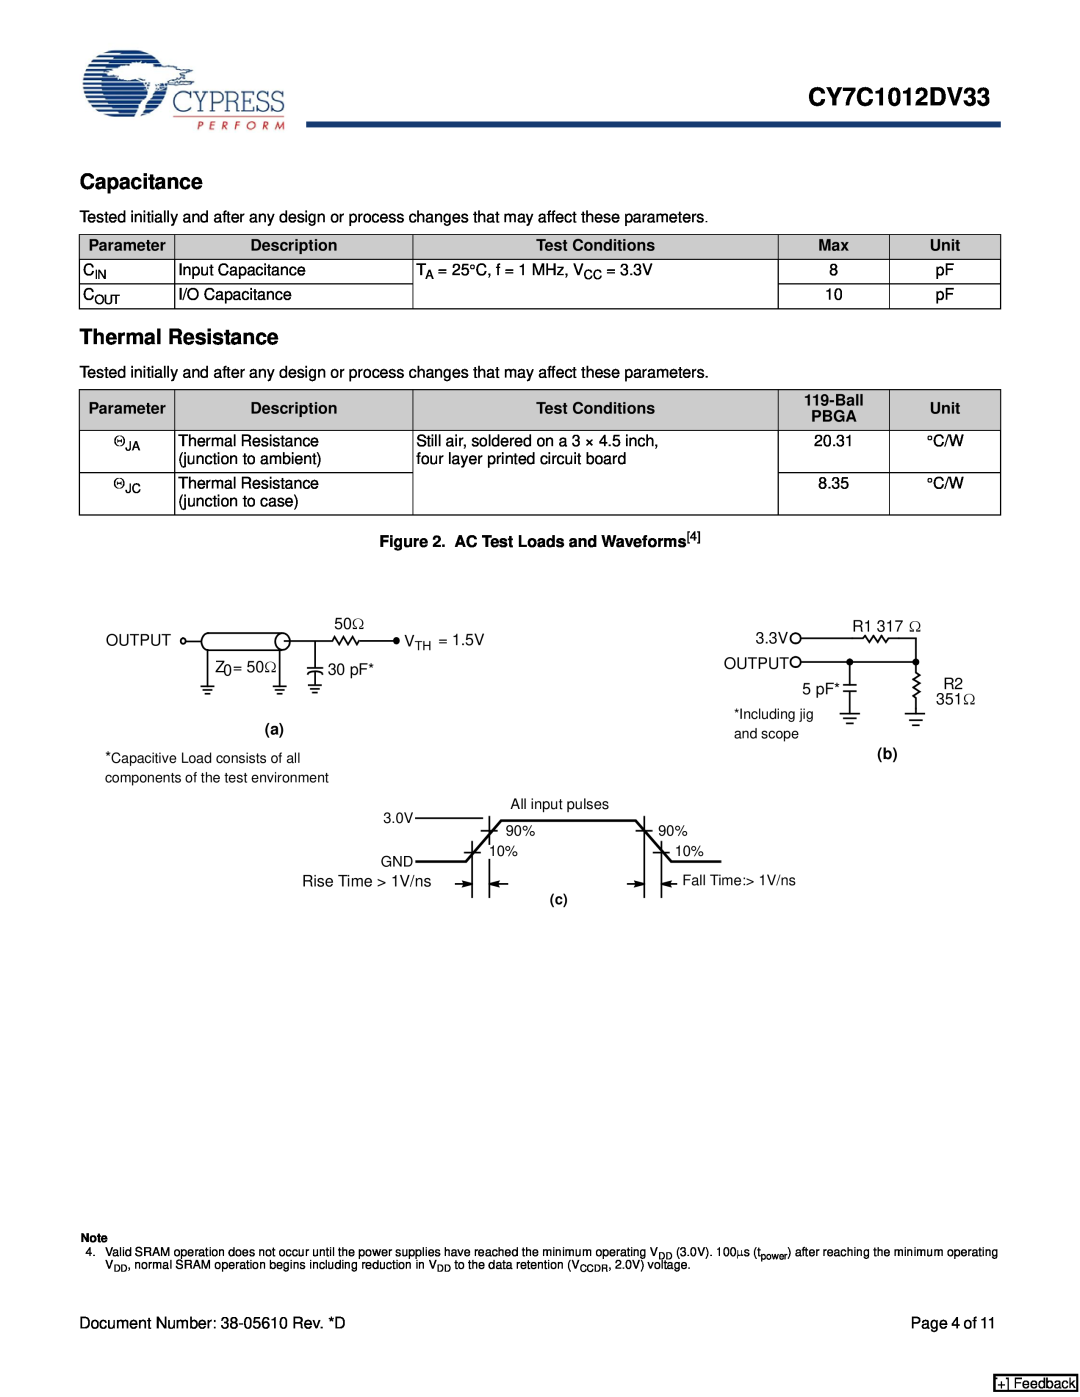 Cypress CY7C1012DV33 Capacitance, Thermal Resistance, Ball, Pbga, AC Test Loads and Waveforms4, Parameter, Description 